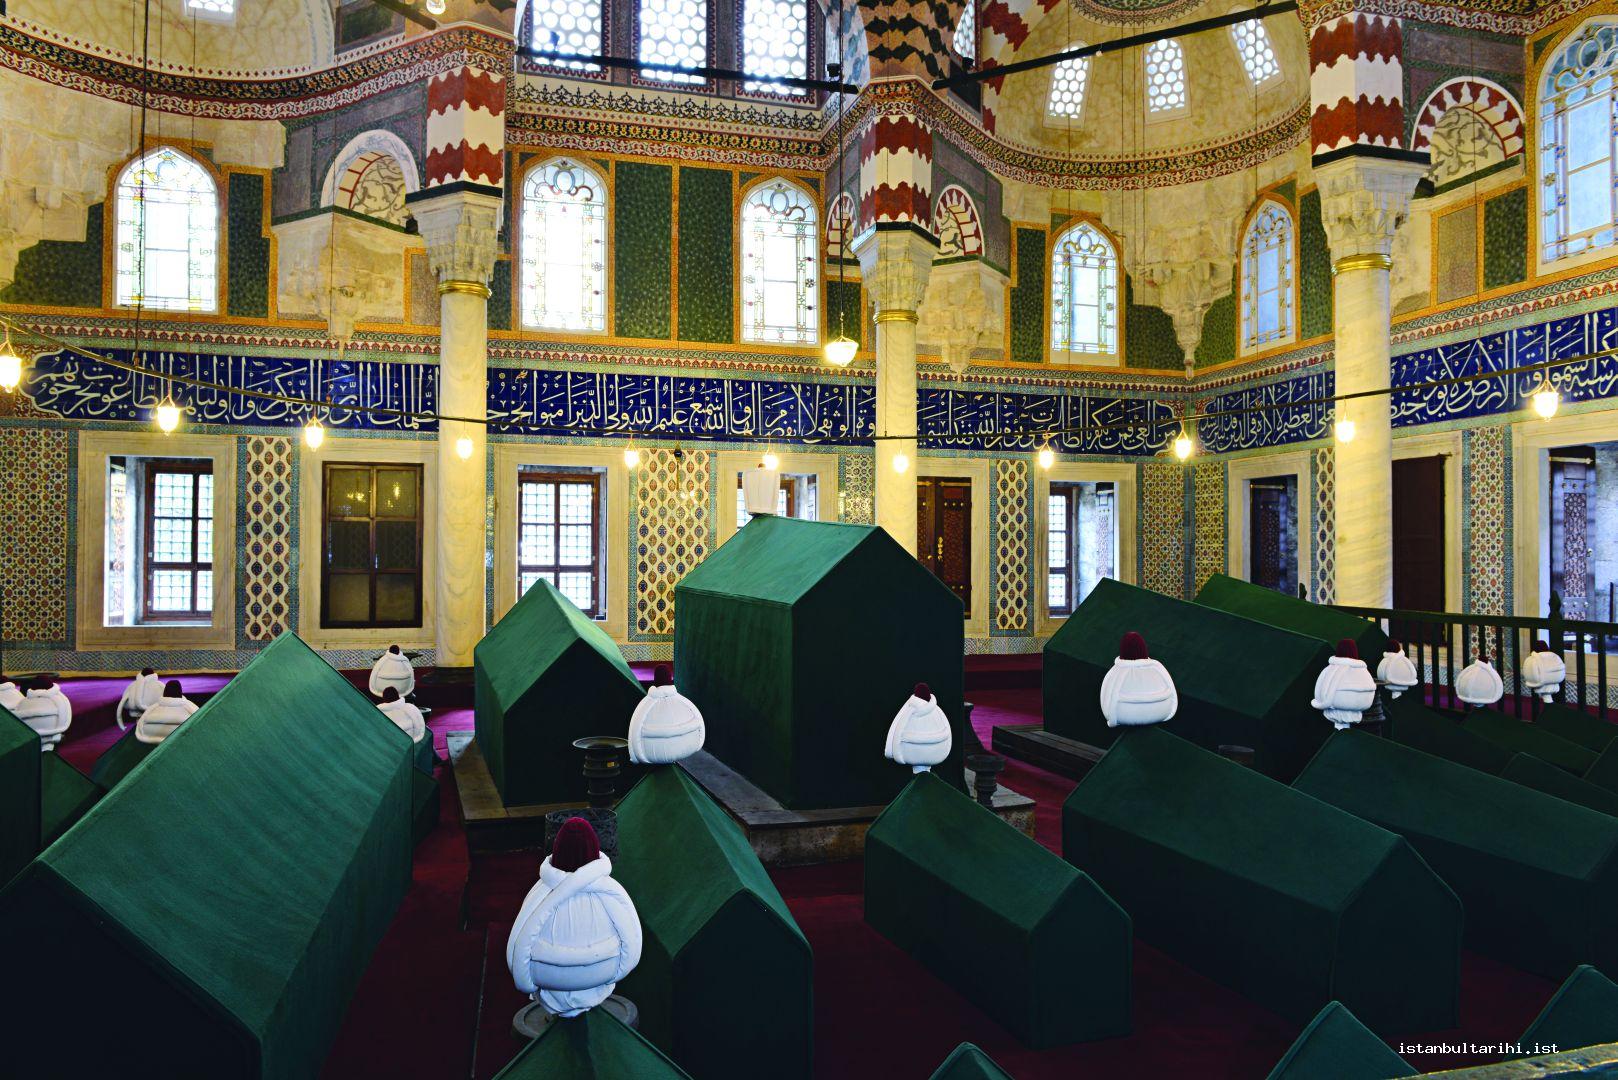 8- The tomb of Sultan Selim II    